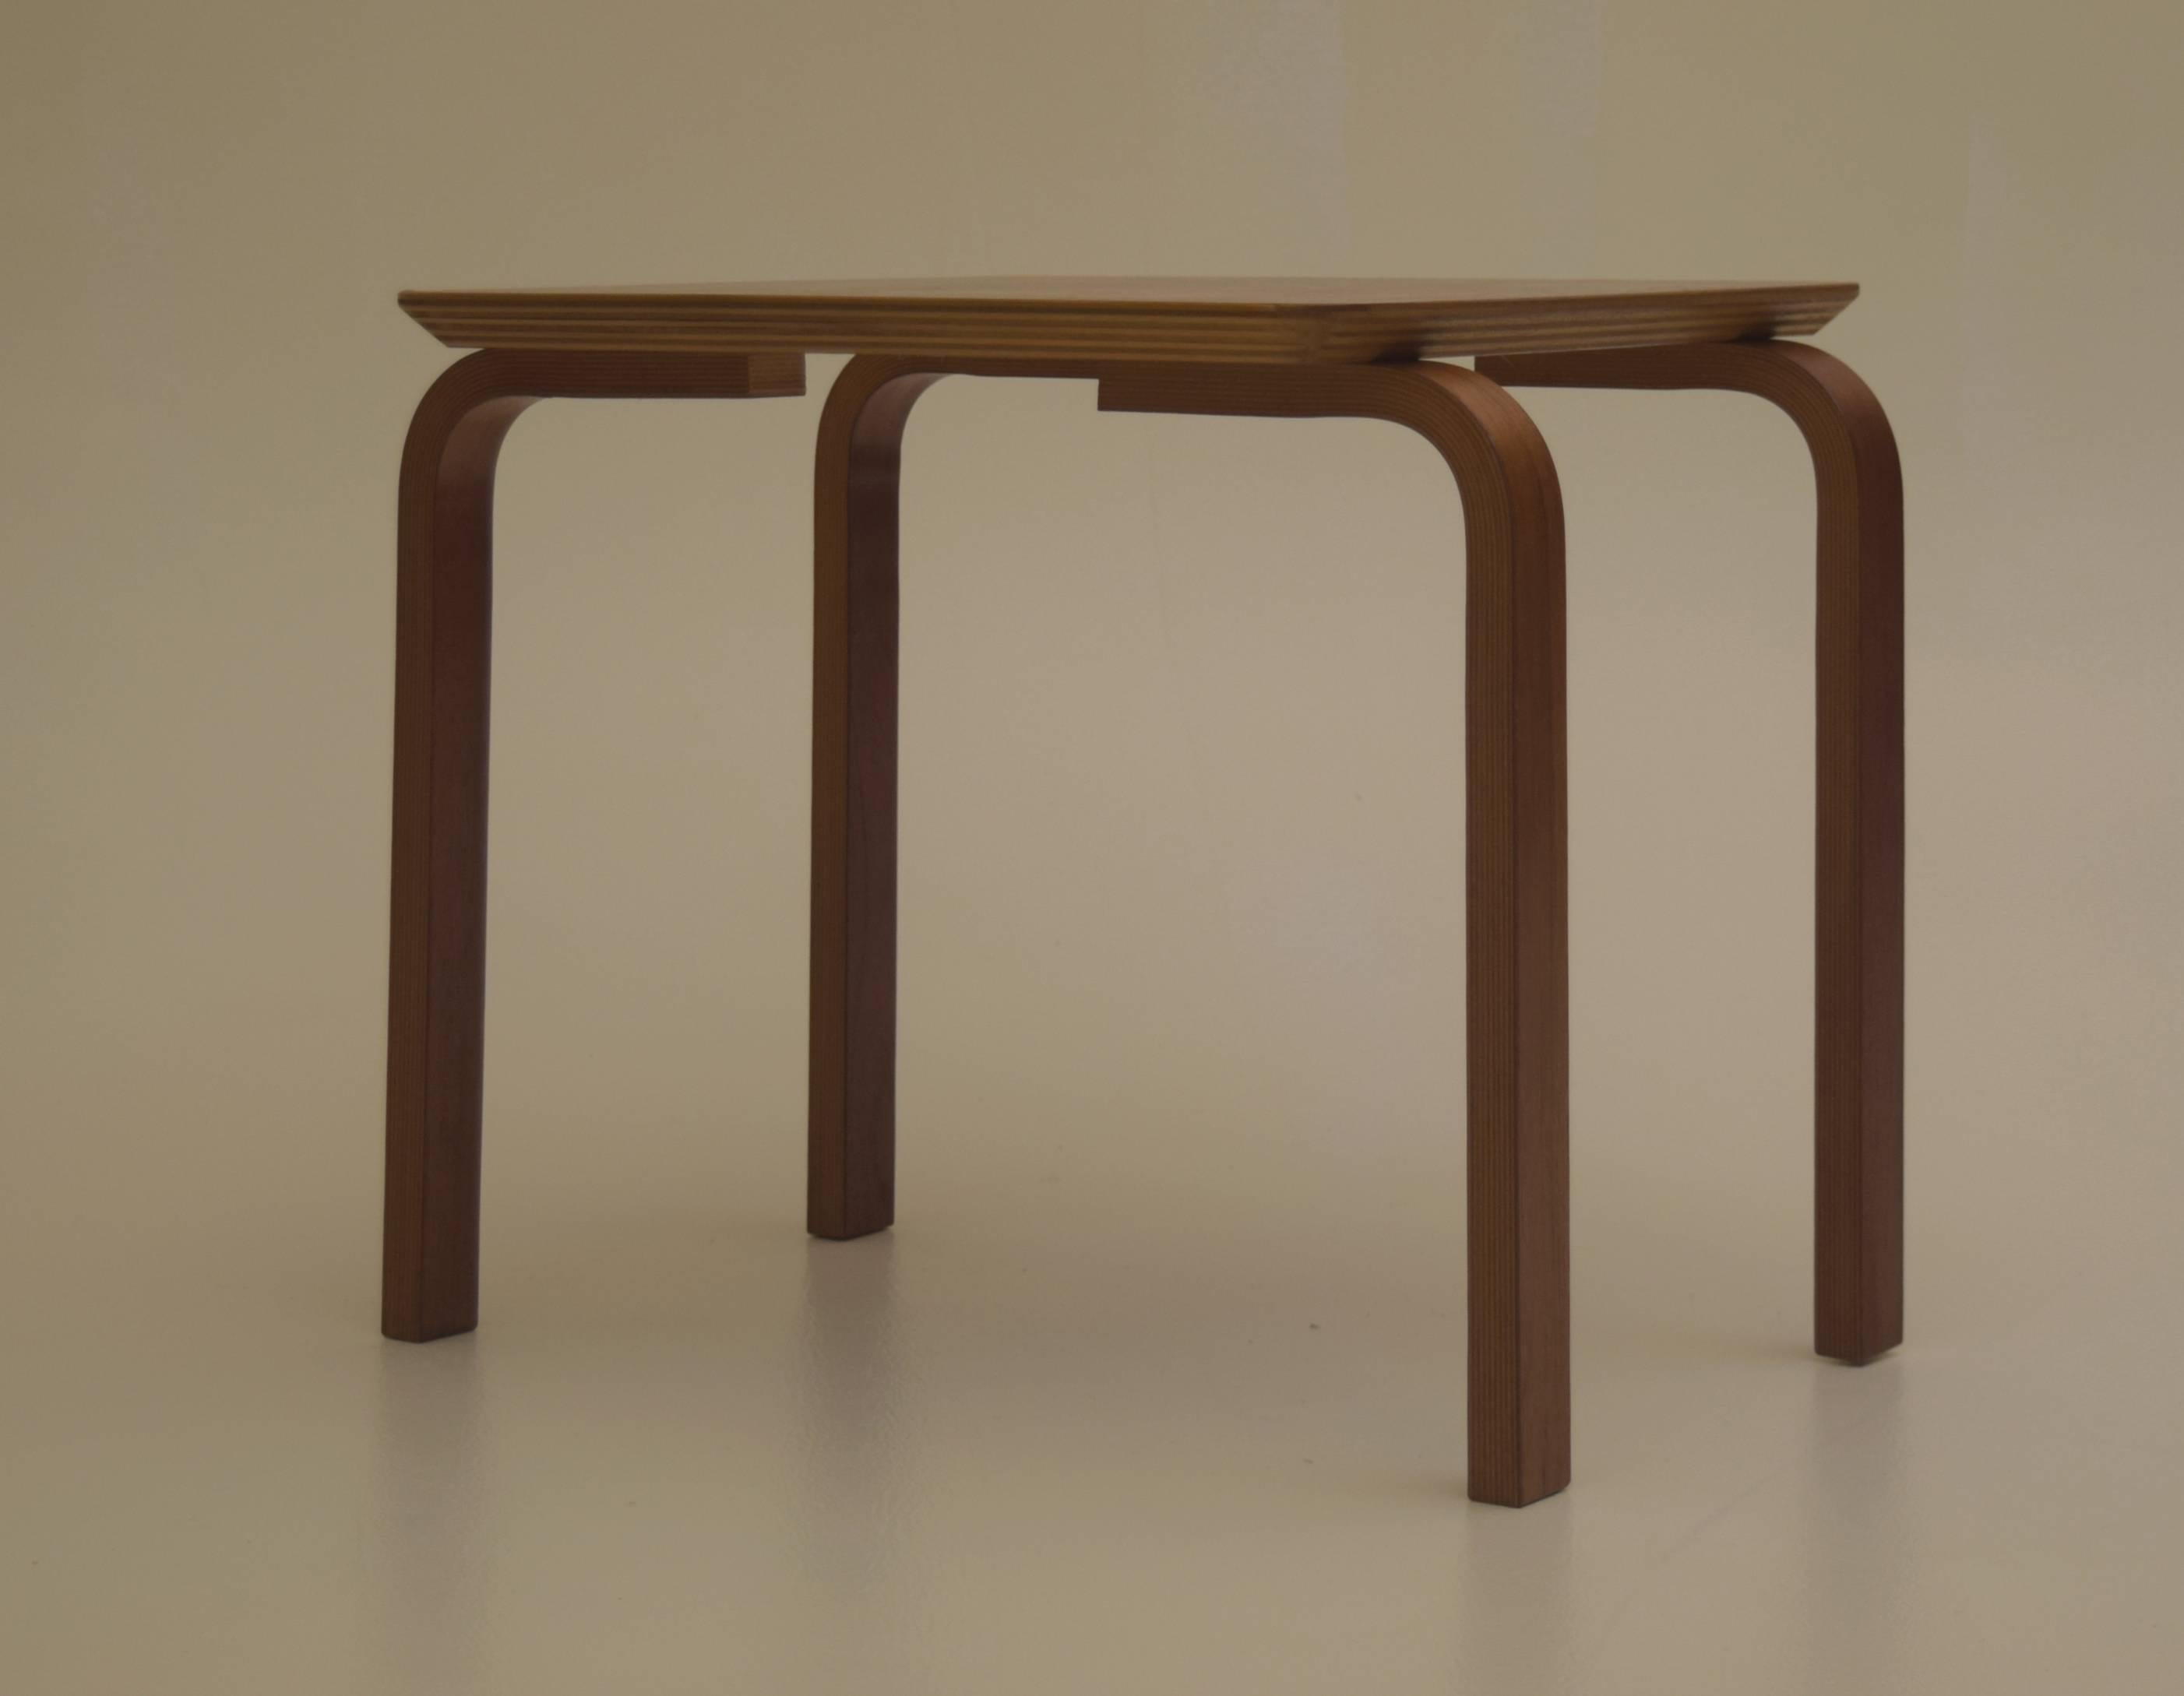 Denmark, Circa 1950
Plywood Table, teak, signed
17.,75 tall, 18